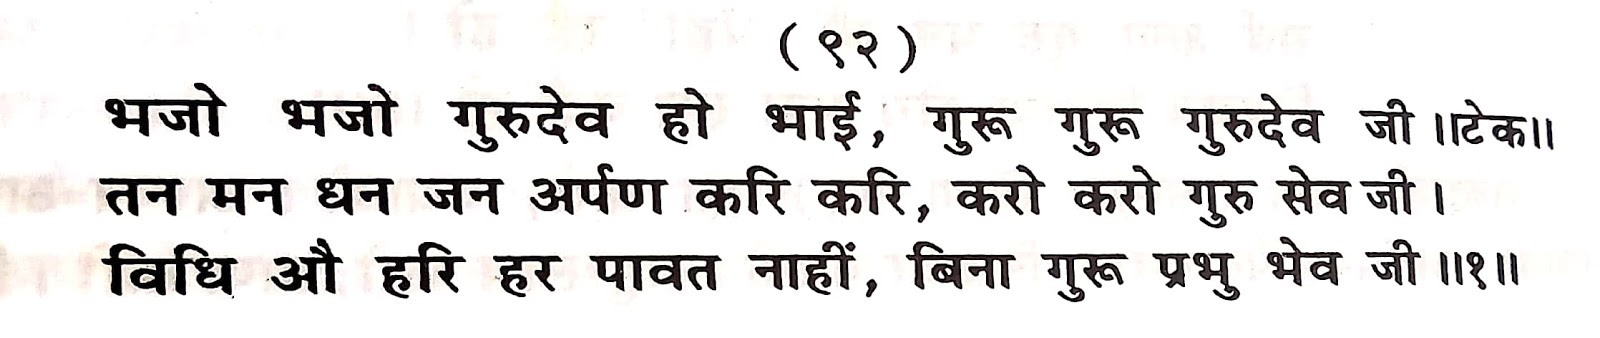 P92, Specialty of guru devotion "भजो भजो गुरुदेव हो भाई,..." महर्षि मेंहीं पदावली अर्थ सहित। पदावली भजन नंबर 92